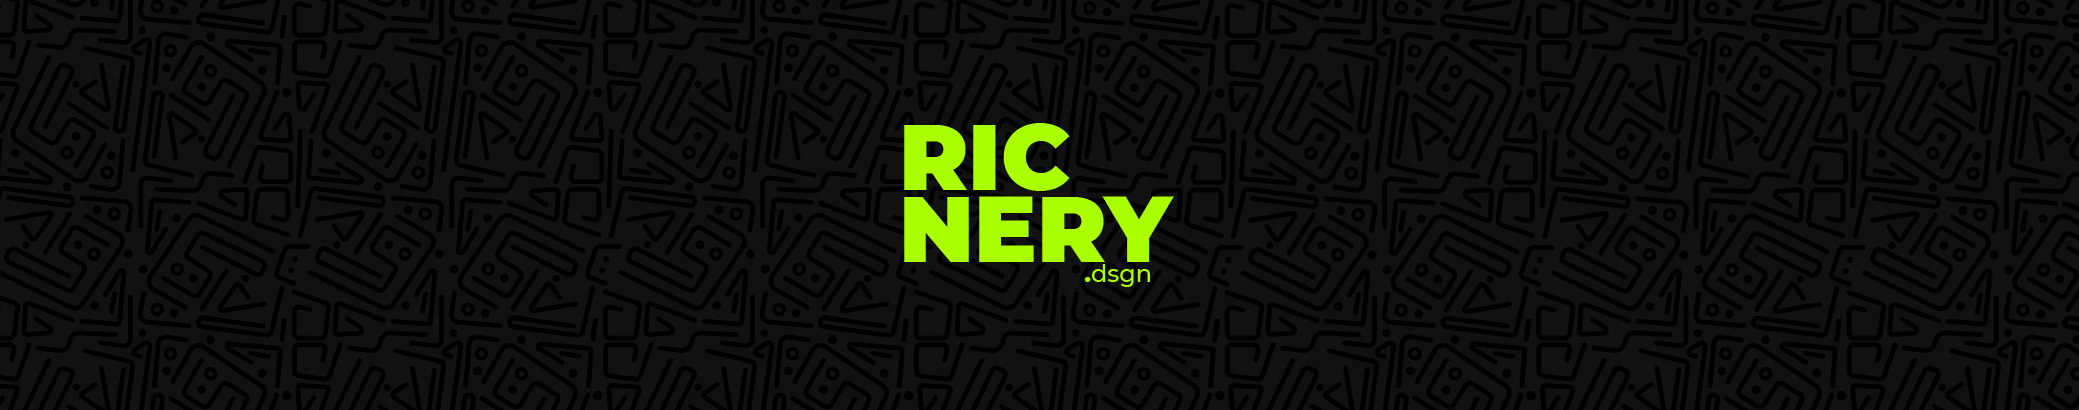 Ricardo Nery's profile banner